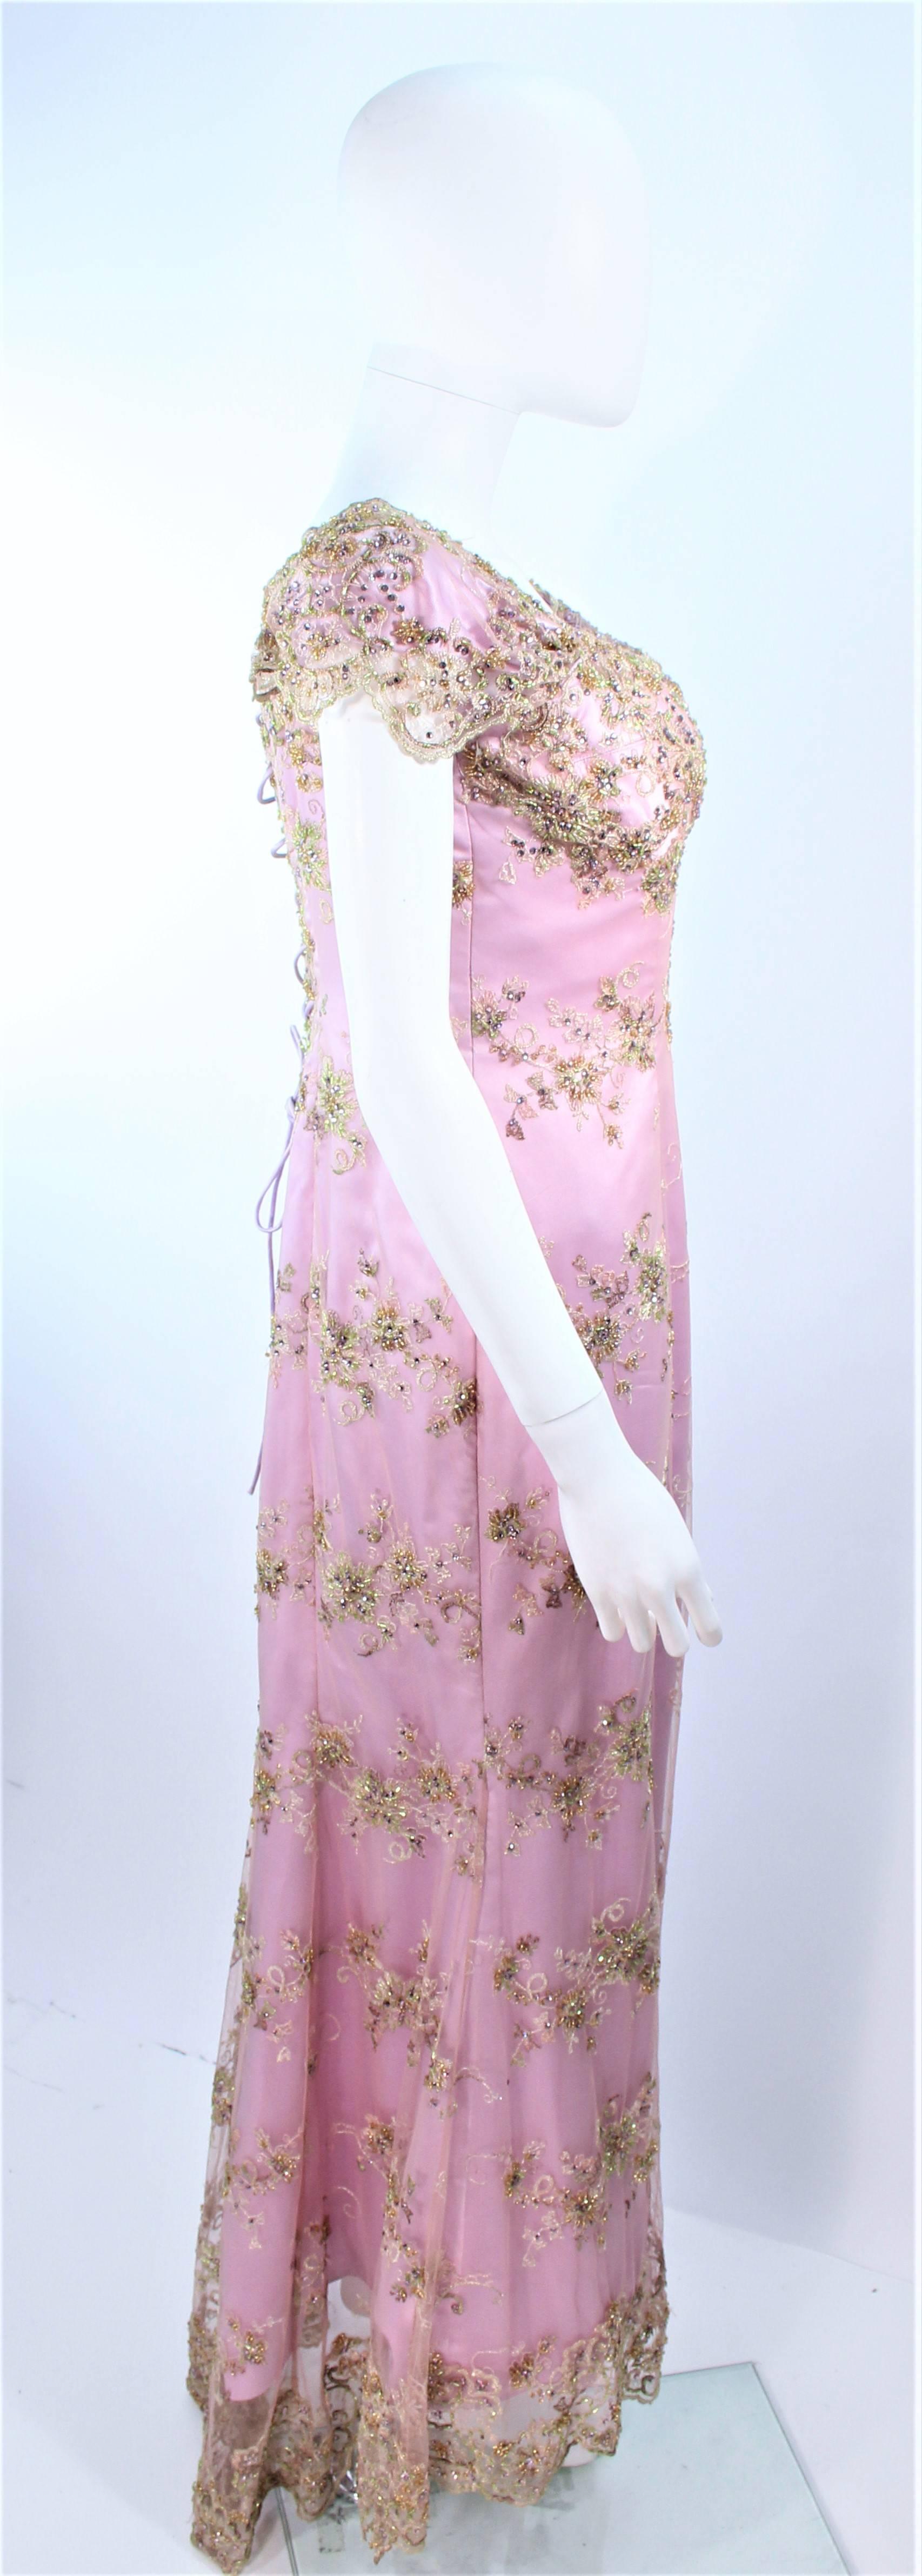 Women's BARACCI Lavender Lace Rhinestone Corset Gown Size 6 8